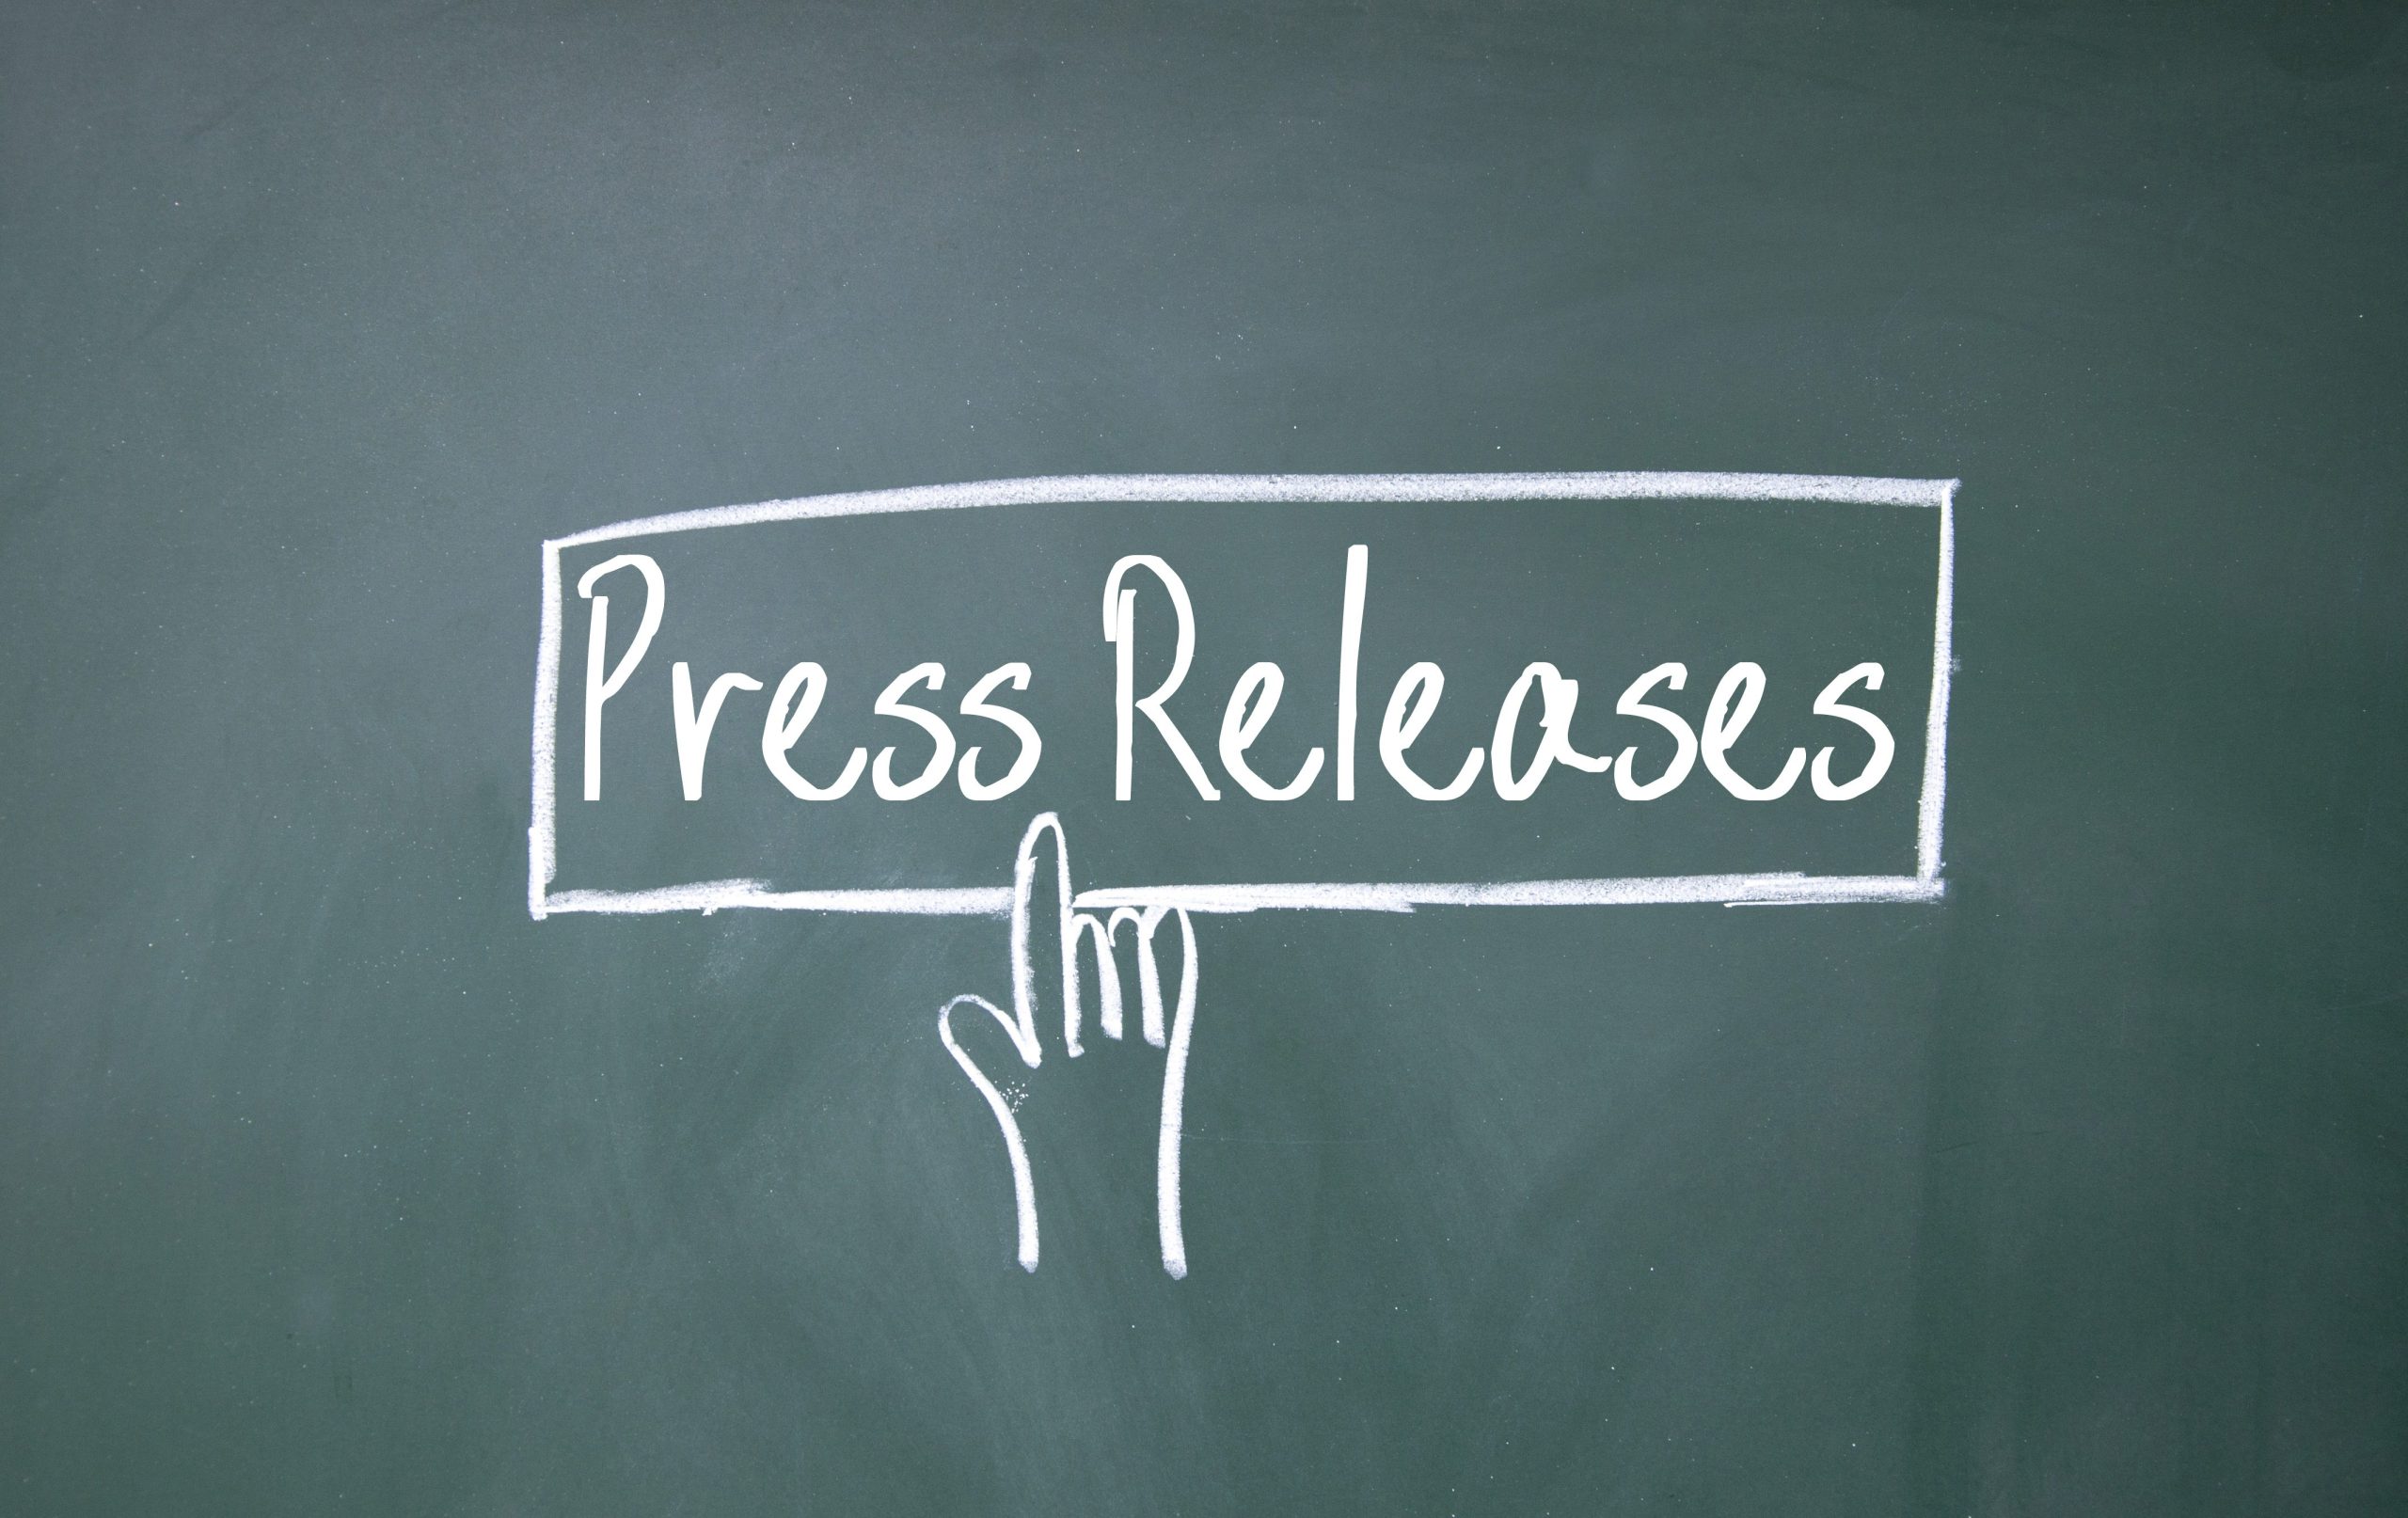 Benefits of Press Release